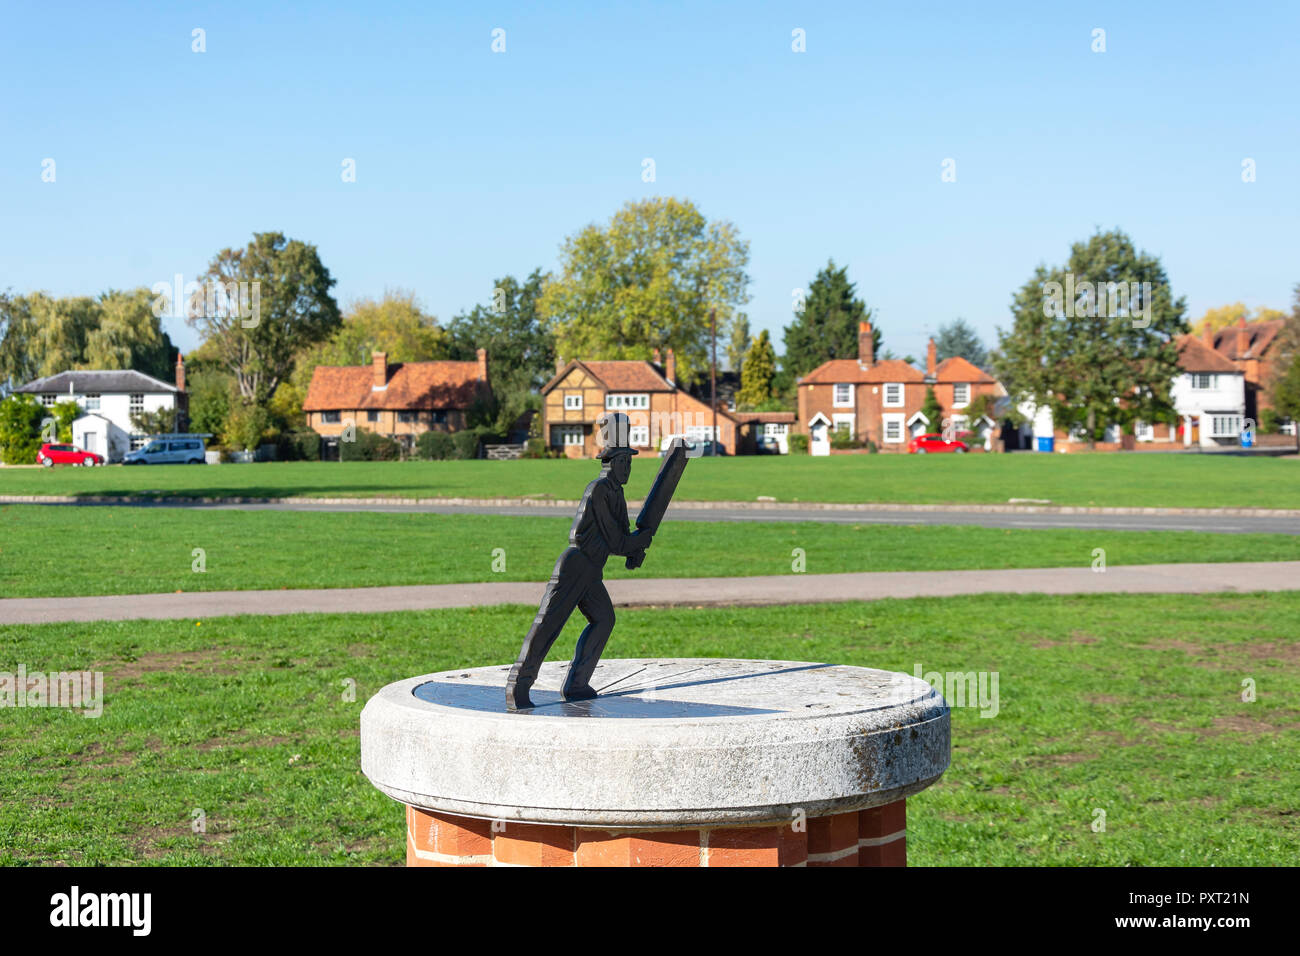 Millennium cricket sundial on Holyport Green, Holyport, Berkshire, England, United Kingdom Stock Photo